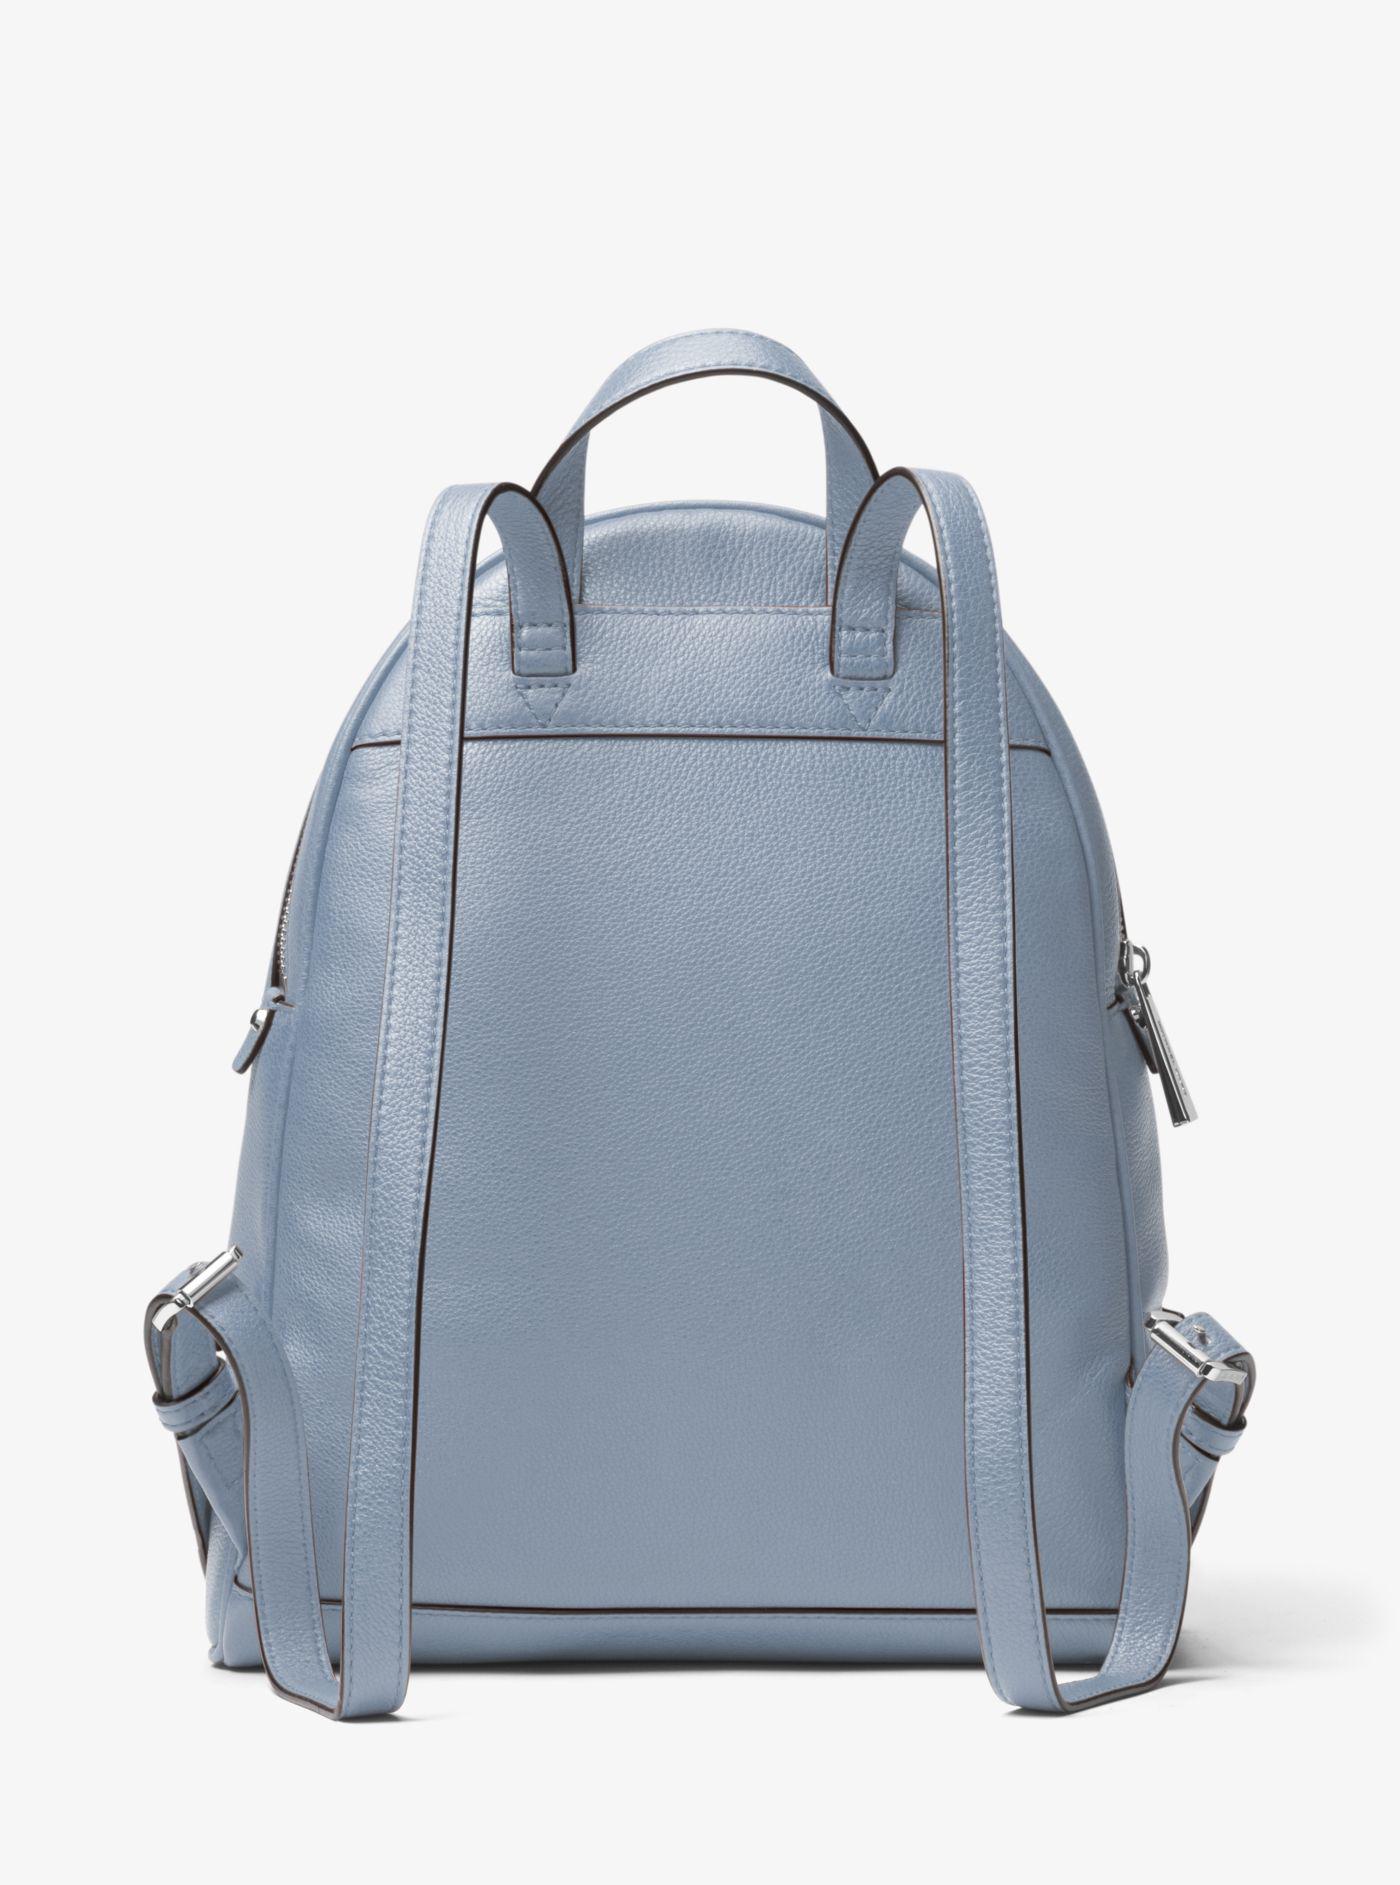 Michael Kors Rhea Medium Leather Backpack in Pale Blue (Blue) - Lyst